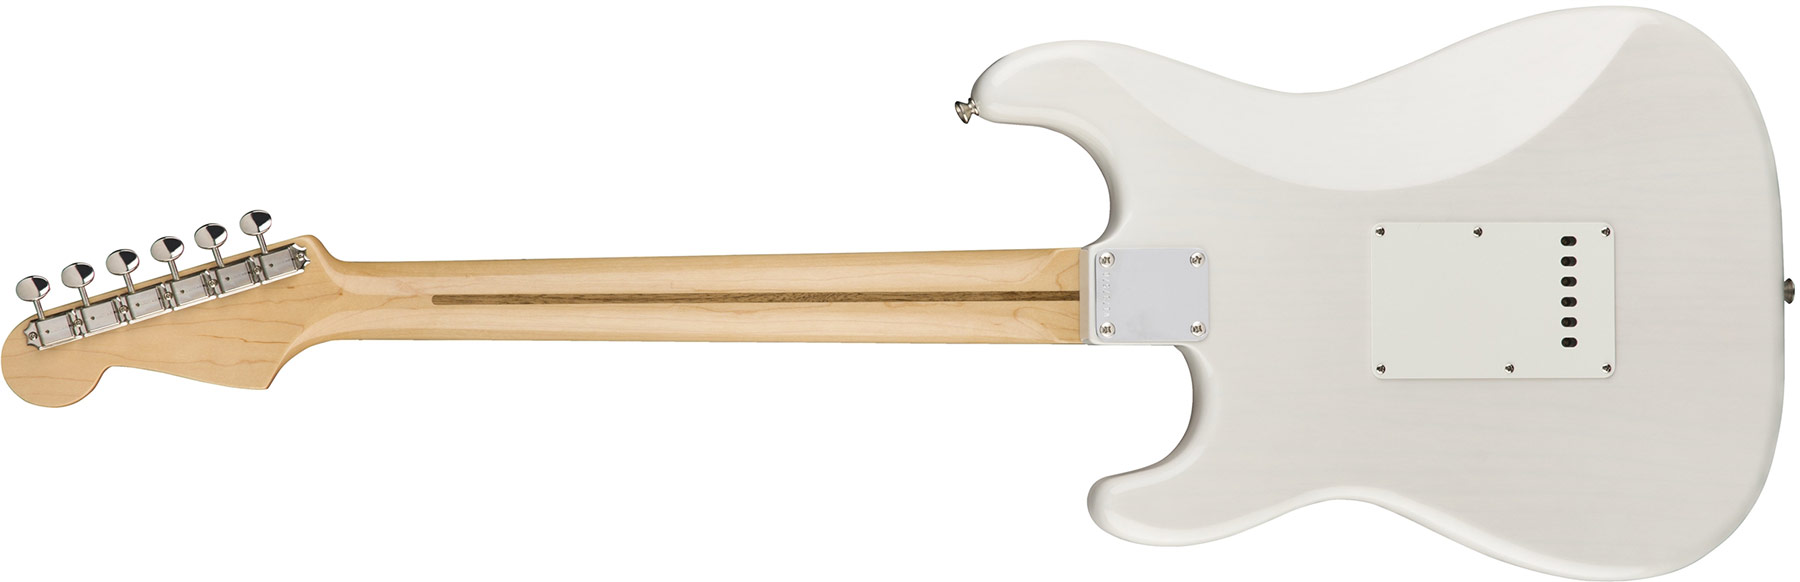 Fender Strat '50s American Original Usa Sss Mn - White Blonde - Guitarra eléctrica con forma de str. - Variation 2